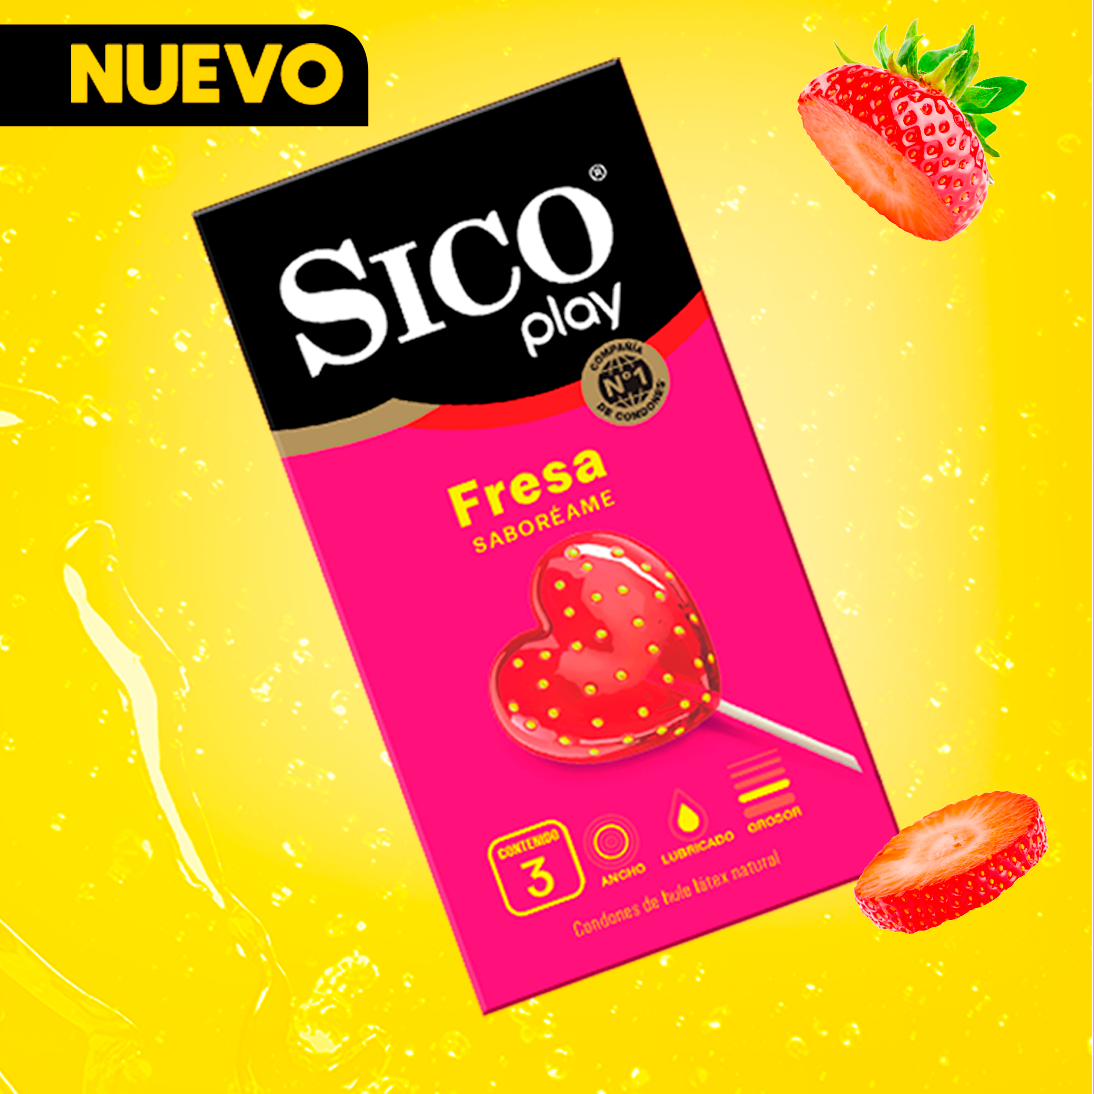 Sico Play Fresa